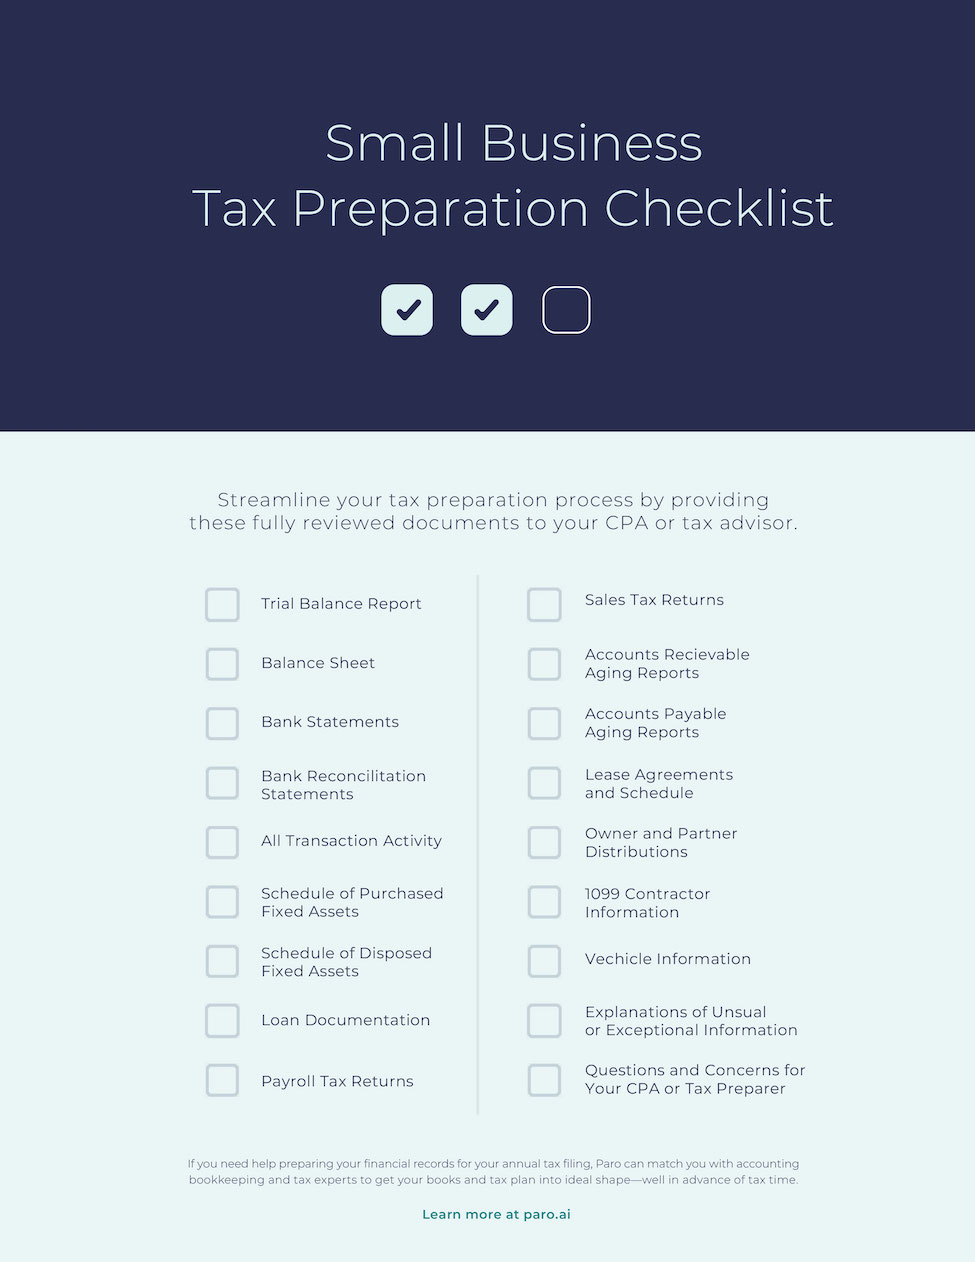 Small Business Tax Preparation Checklist | Paro